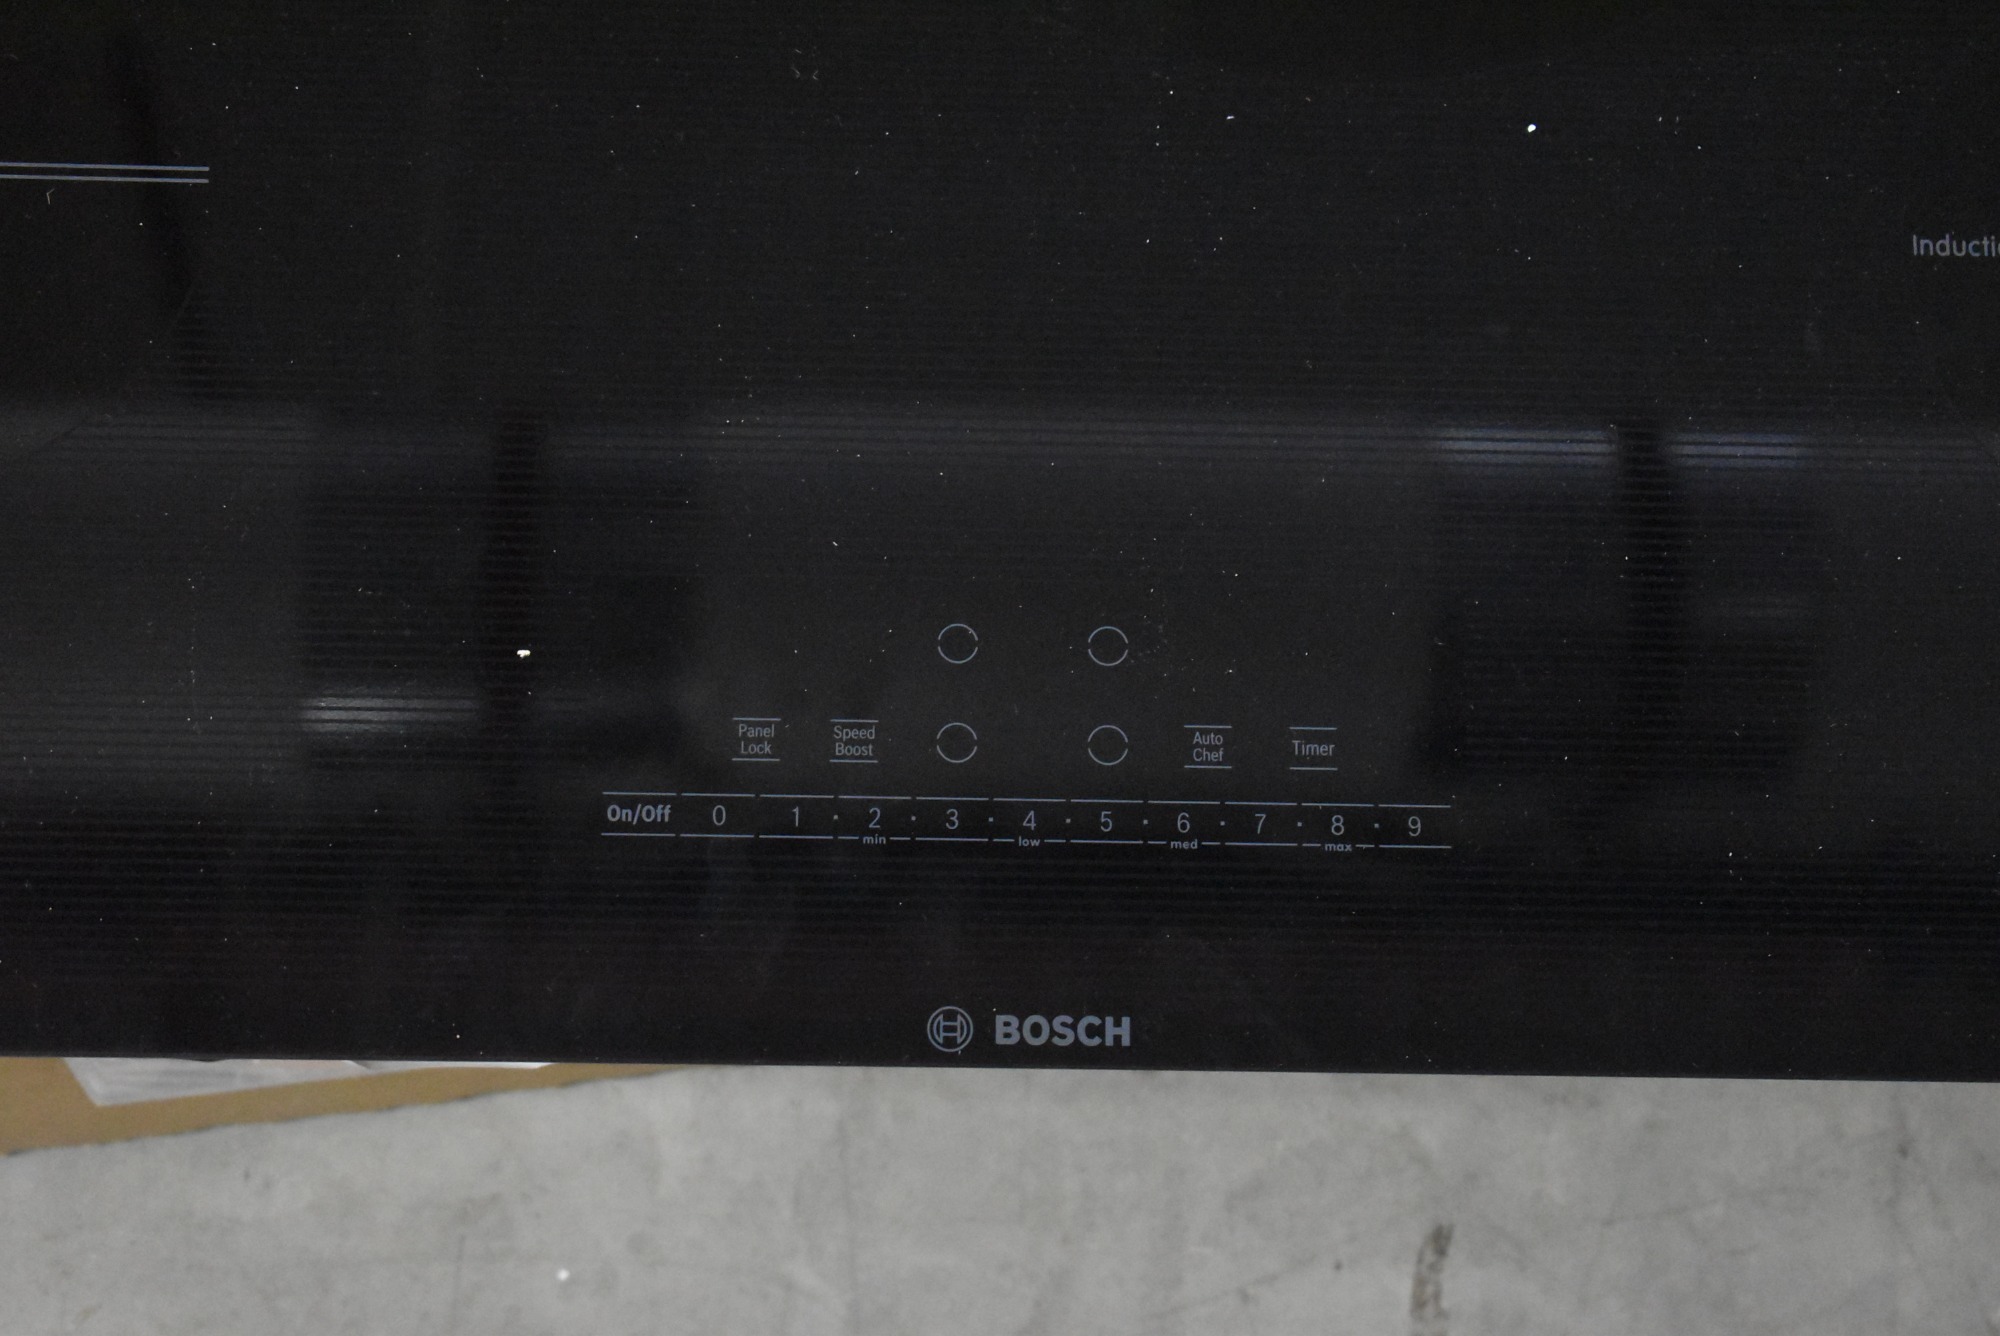 Bosch Nit8068uc 30 Black 800 Series Induction Cooktop Nob 44706 Hrt